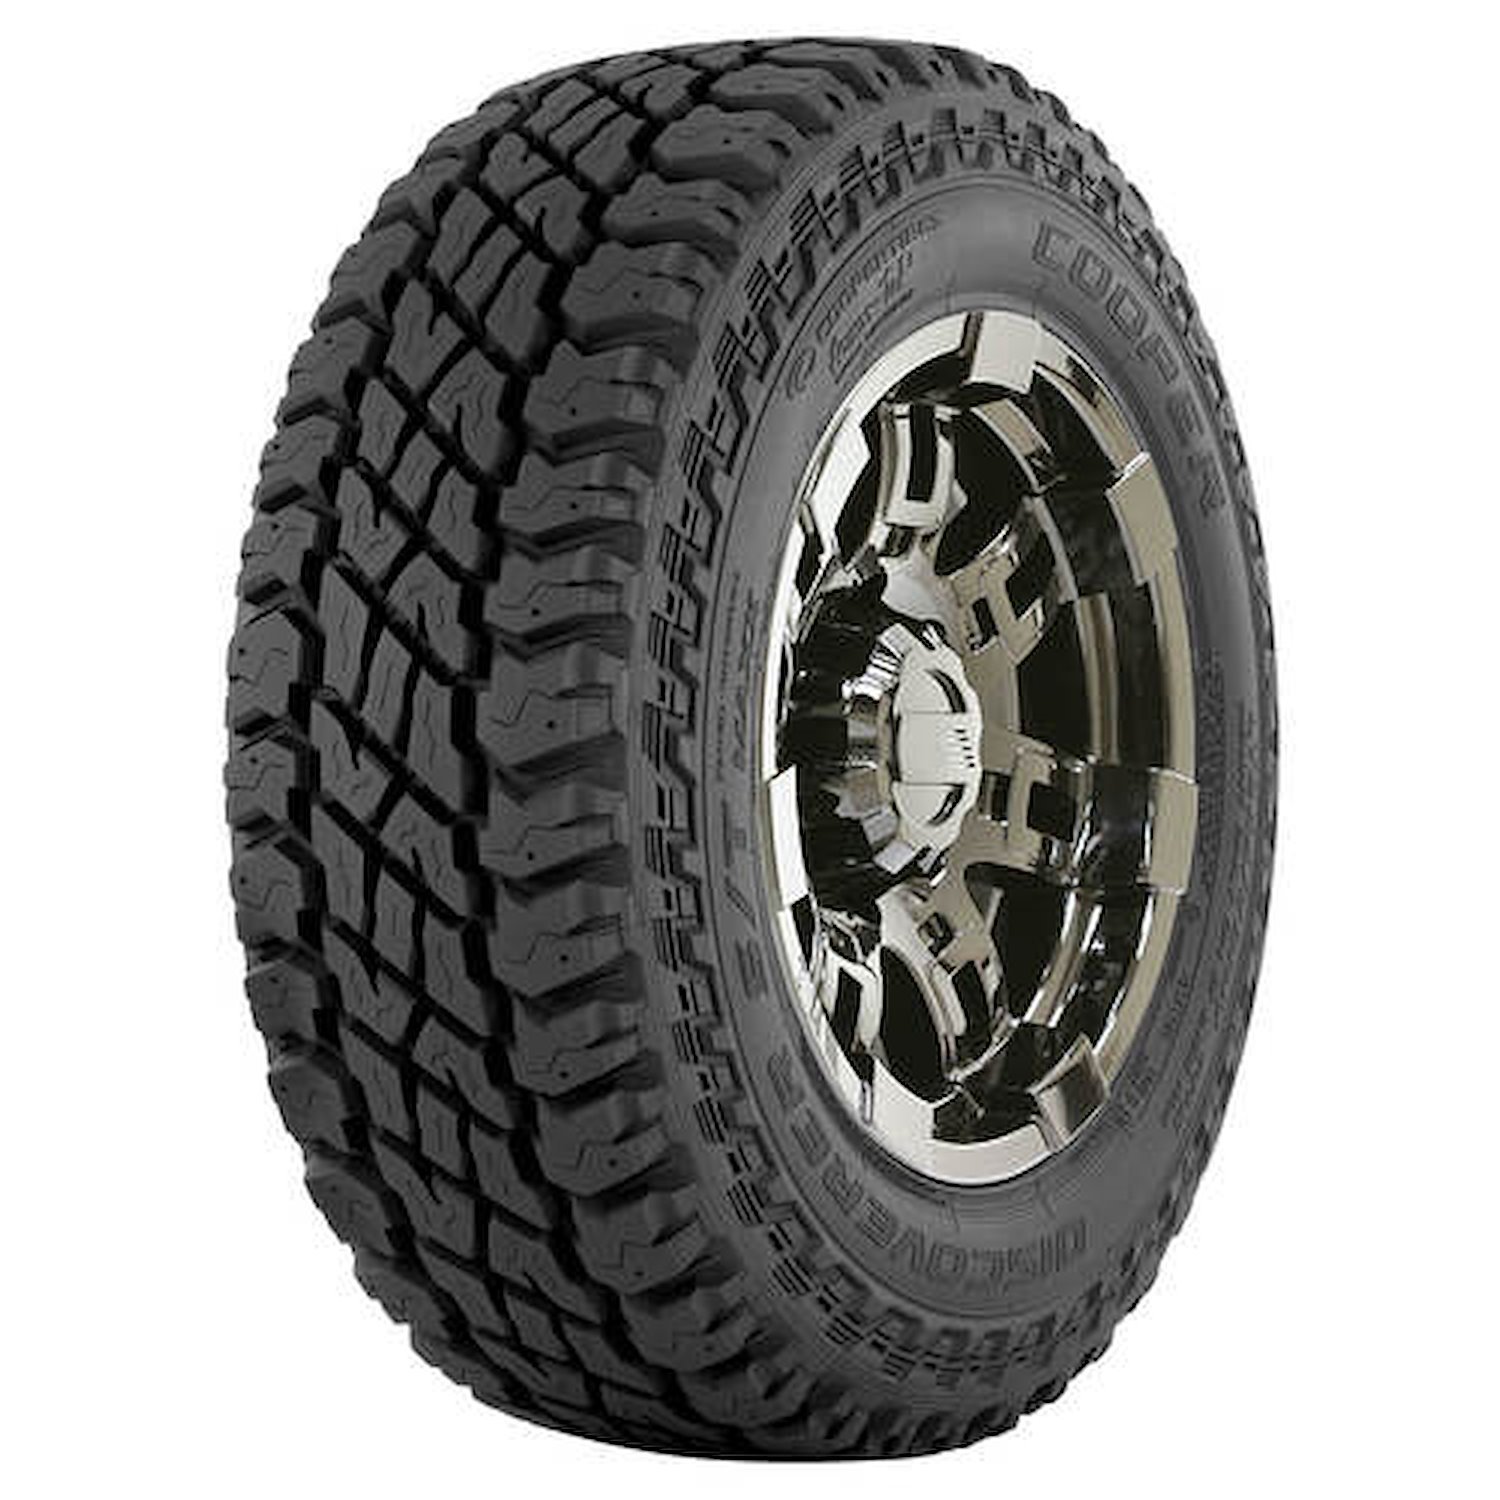 Discoverer S/T Maxx All-Terrain Tire, LT275/65R20